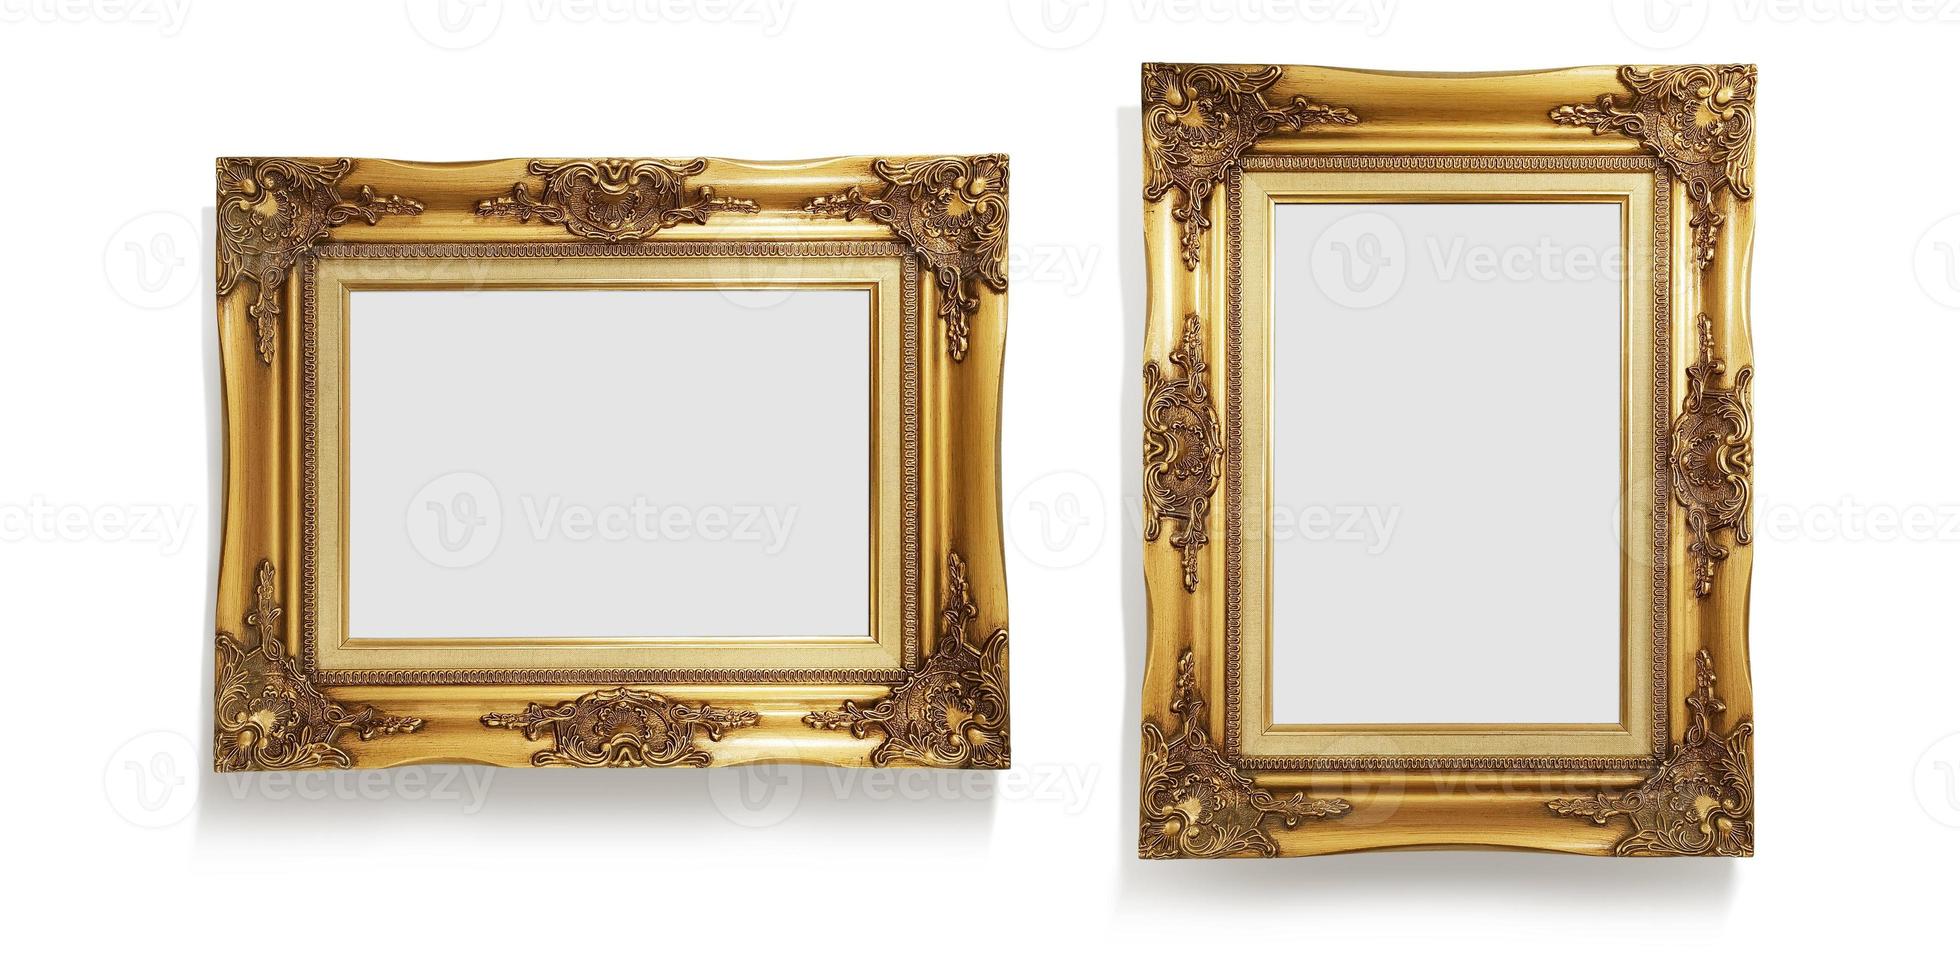 golden antique photo frame isolated on white